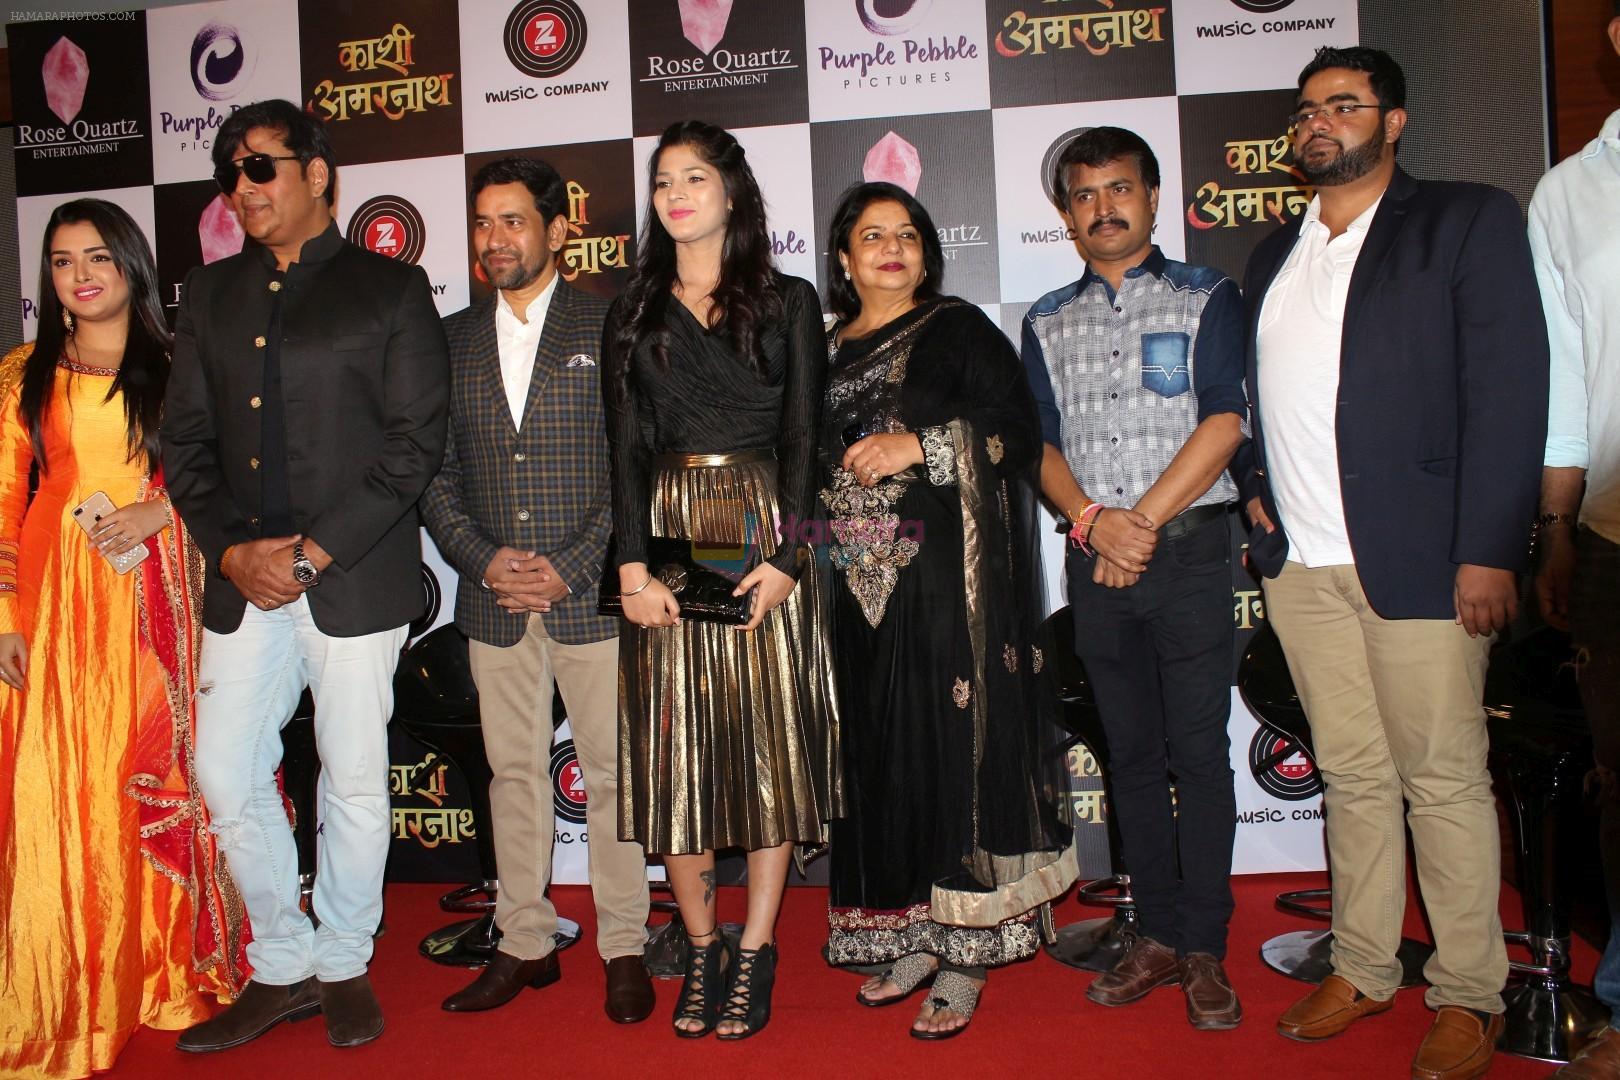 Dinesh Lal Yadav, Ravi Kishan At Trailer Launch Bhojpuri Film Kaashi Amarnath on 16th Sept 2017